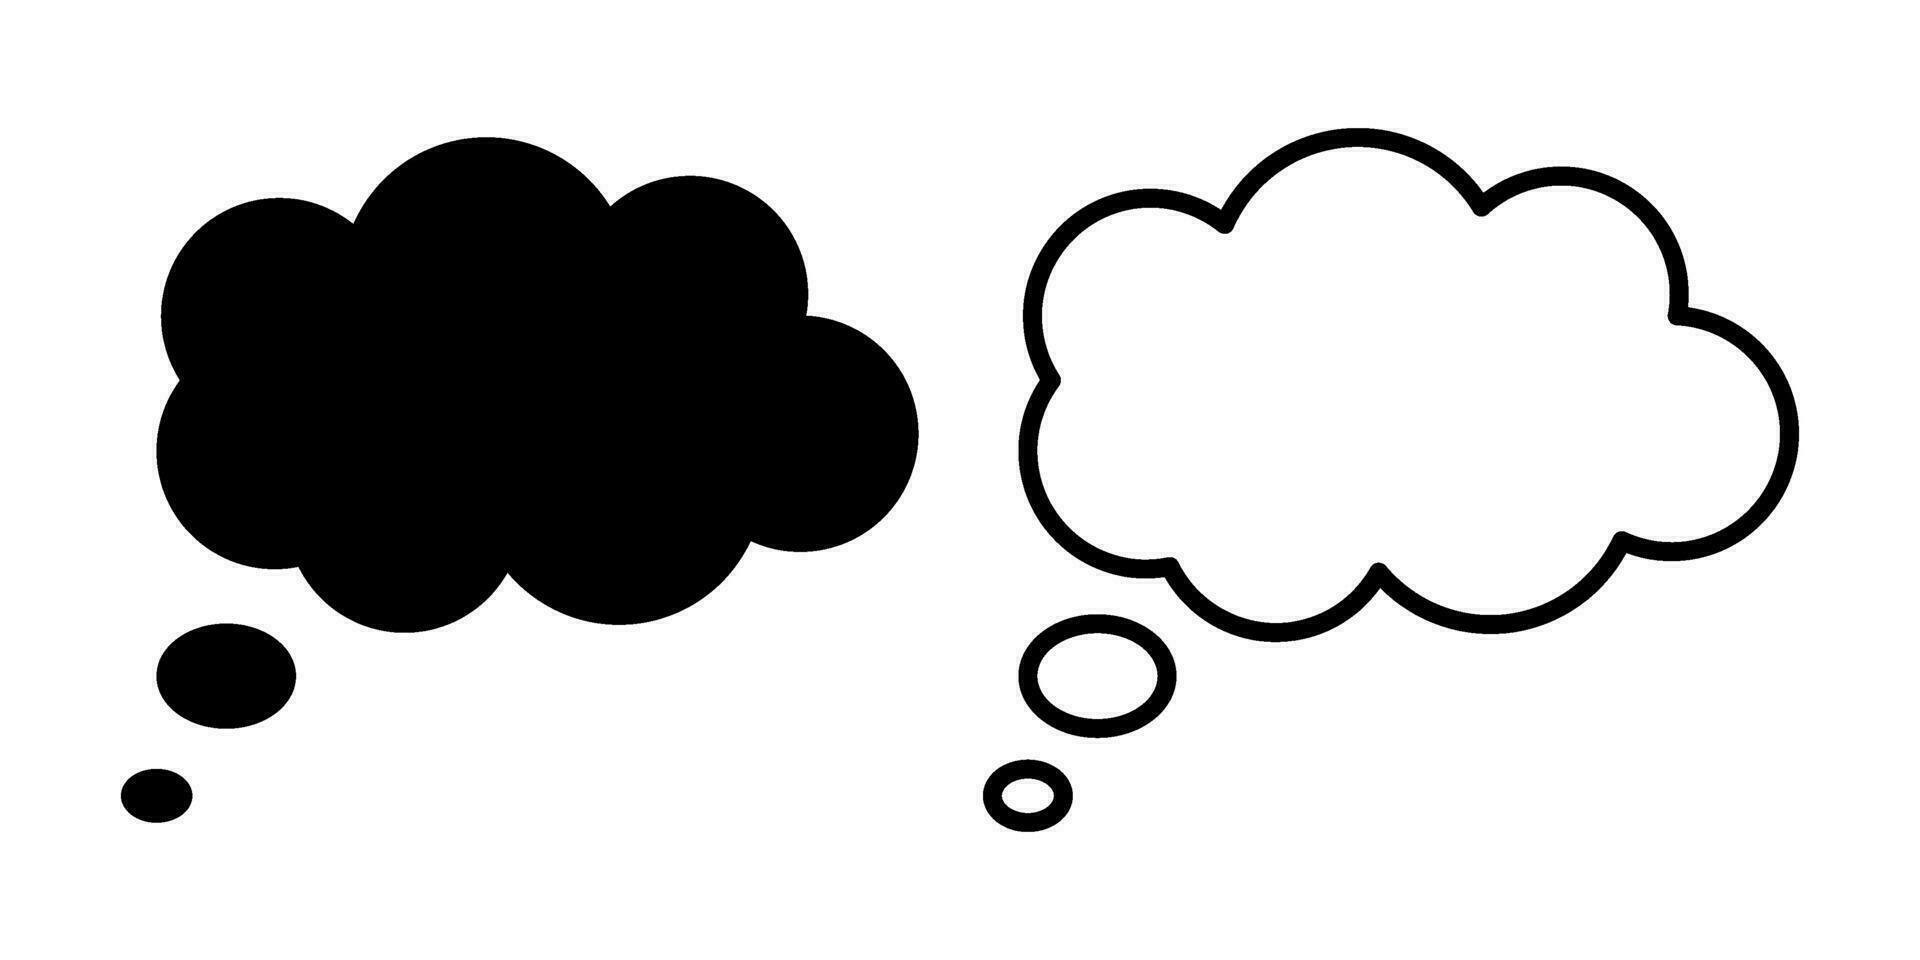 Speech bubble icon. Thinking icon vector